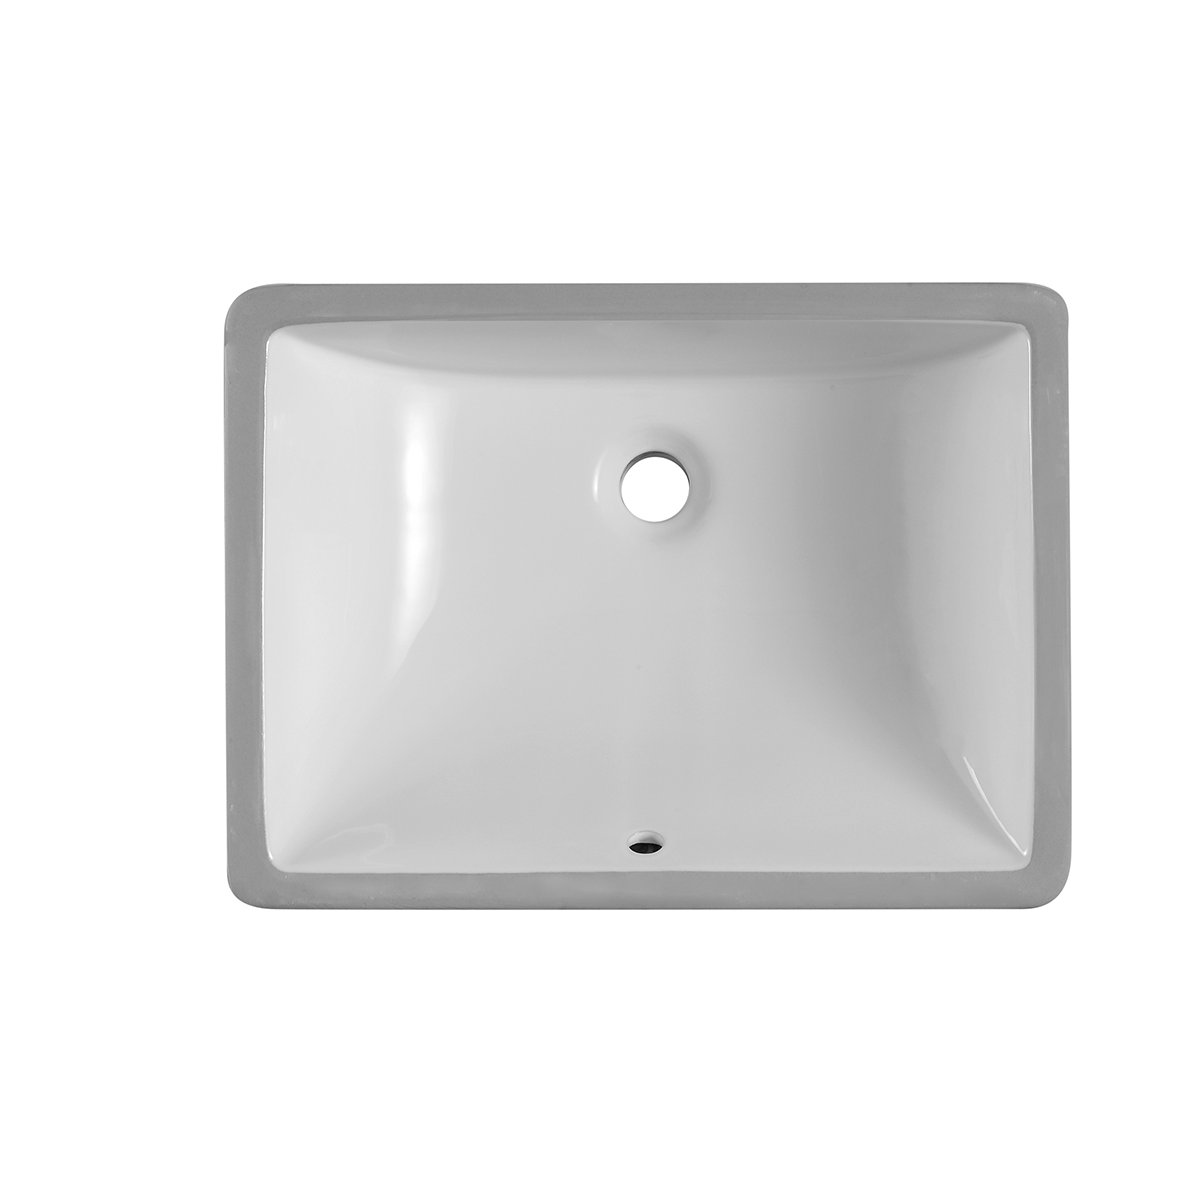 DAX Ceramic Square Undermount Bathroom Basin, 18", Glossy White BSN-202M-W